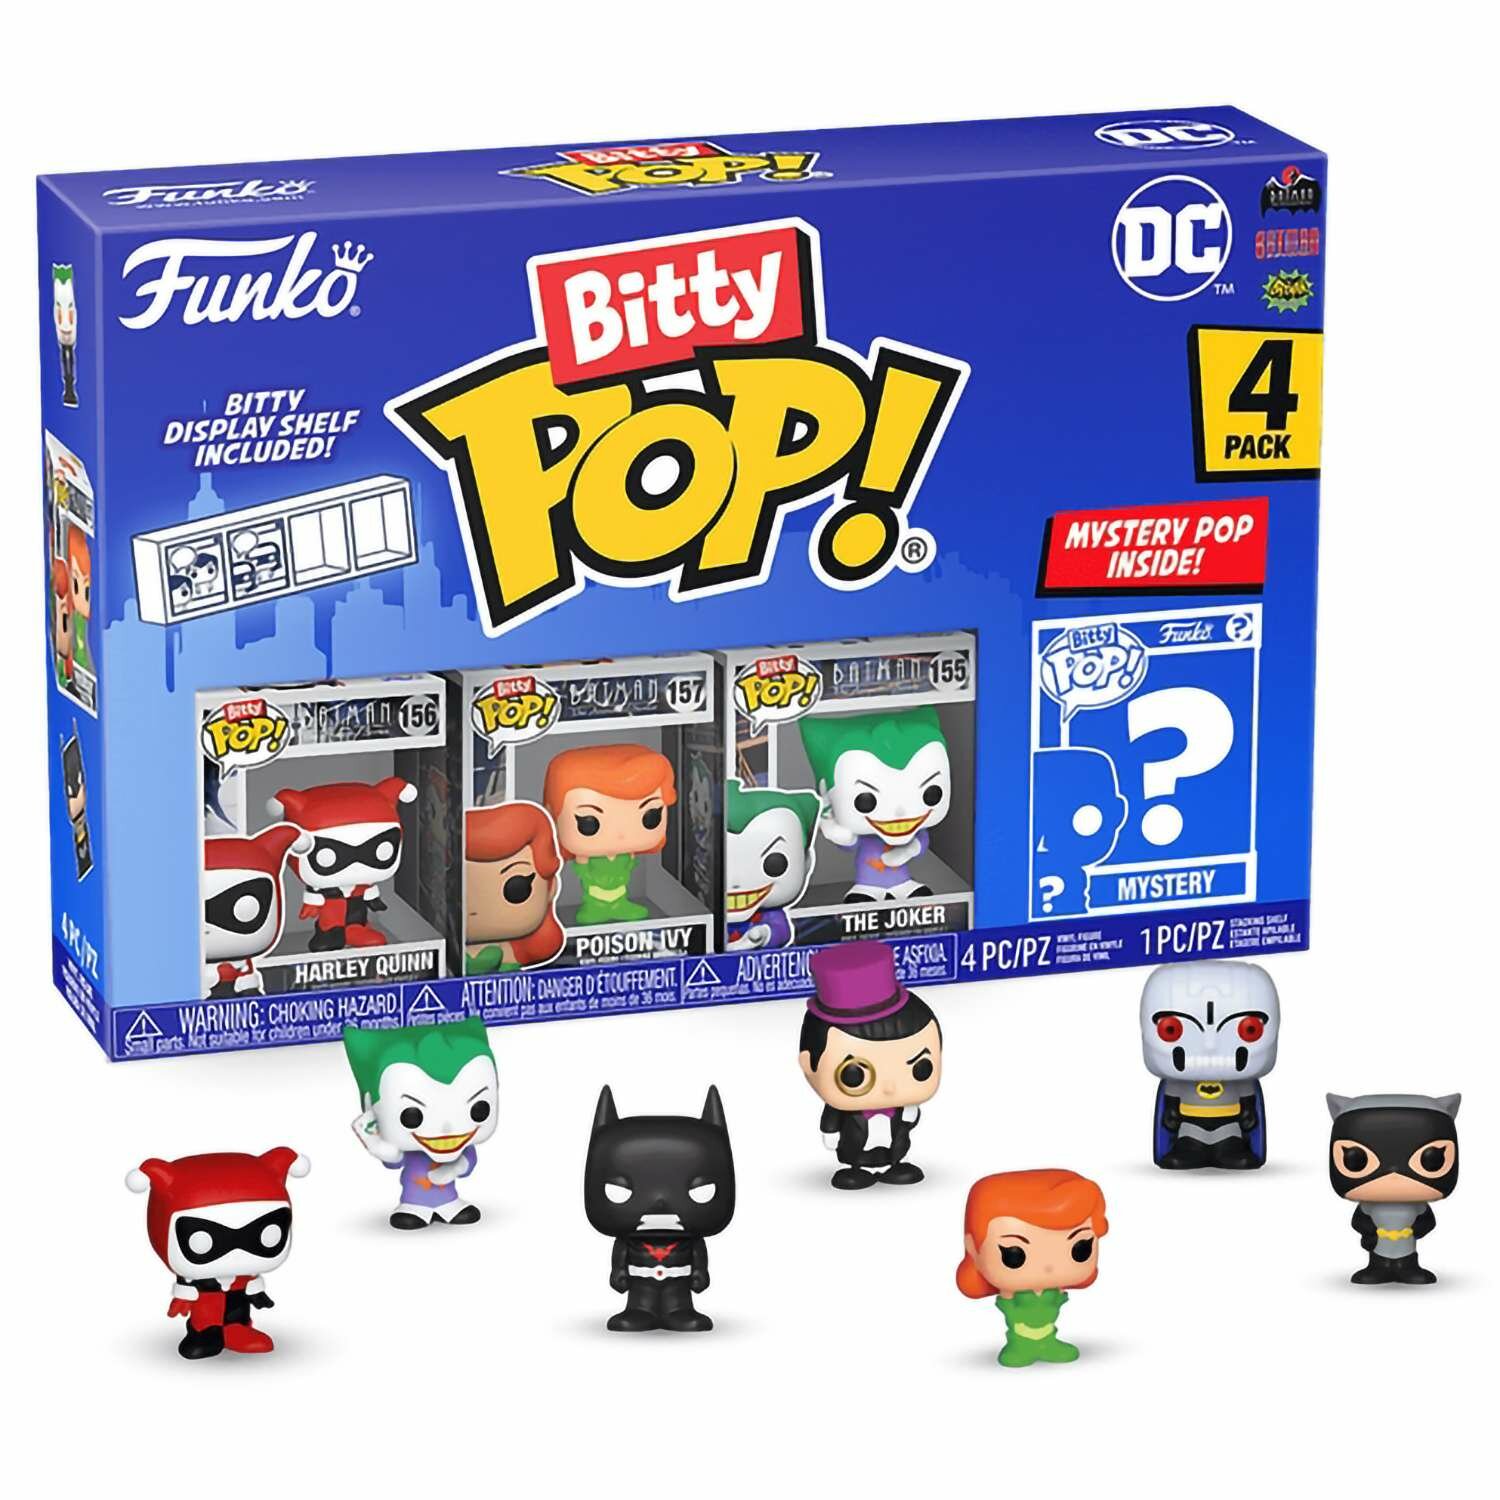 Фигурки Funko Bitty POP! DC Comics S3 Harley Quinn+Poison Ivy+Joker+Mystery (1 of 4) 4PK 71313